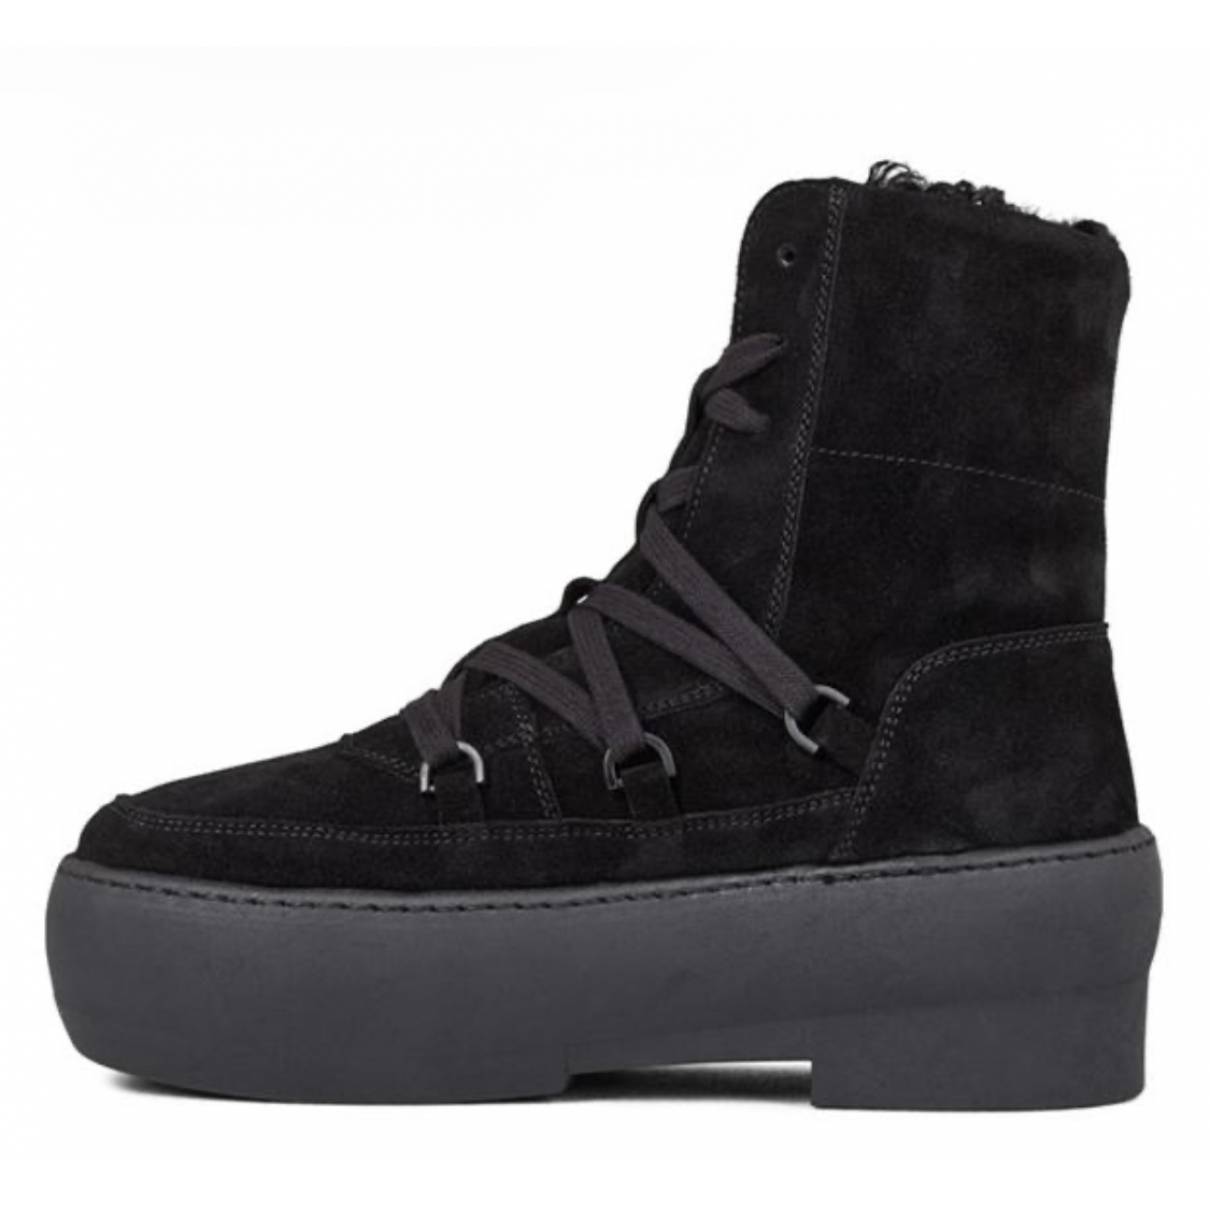 Buy Gia Borghini Snow boots online